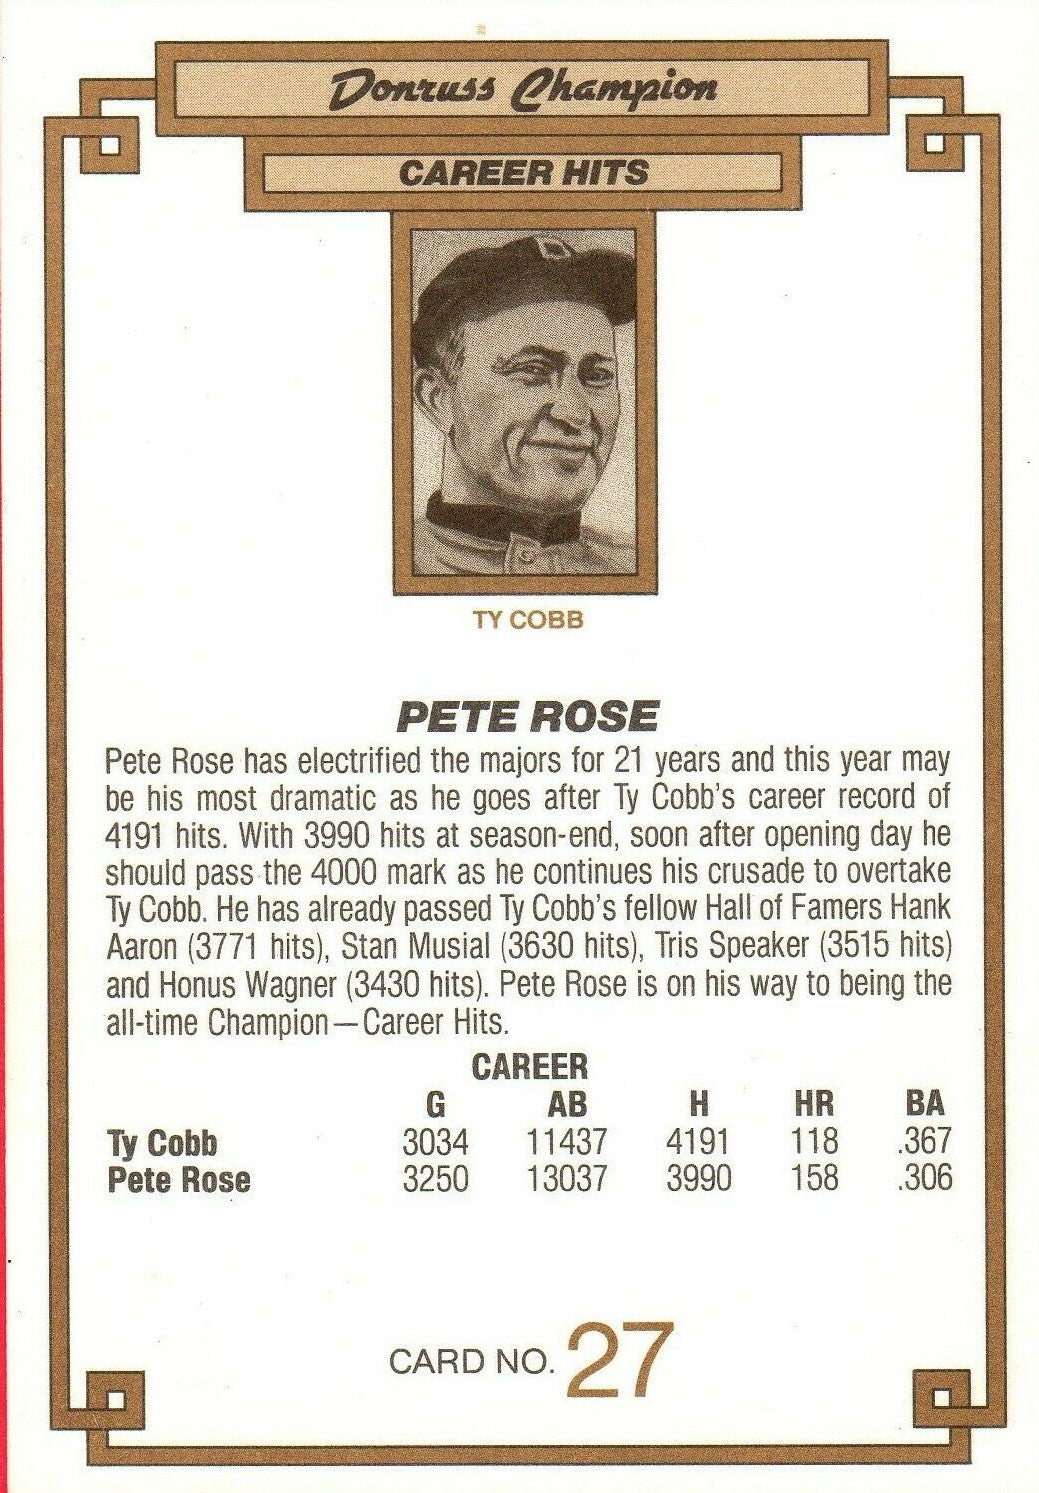 1984 DONRUSS CHAMPIONS "OVERSIZED CARD #27 PETE ROSE PHILADELPHIA PHILLIES